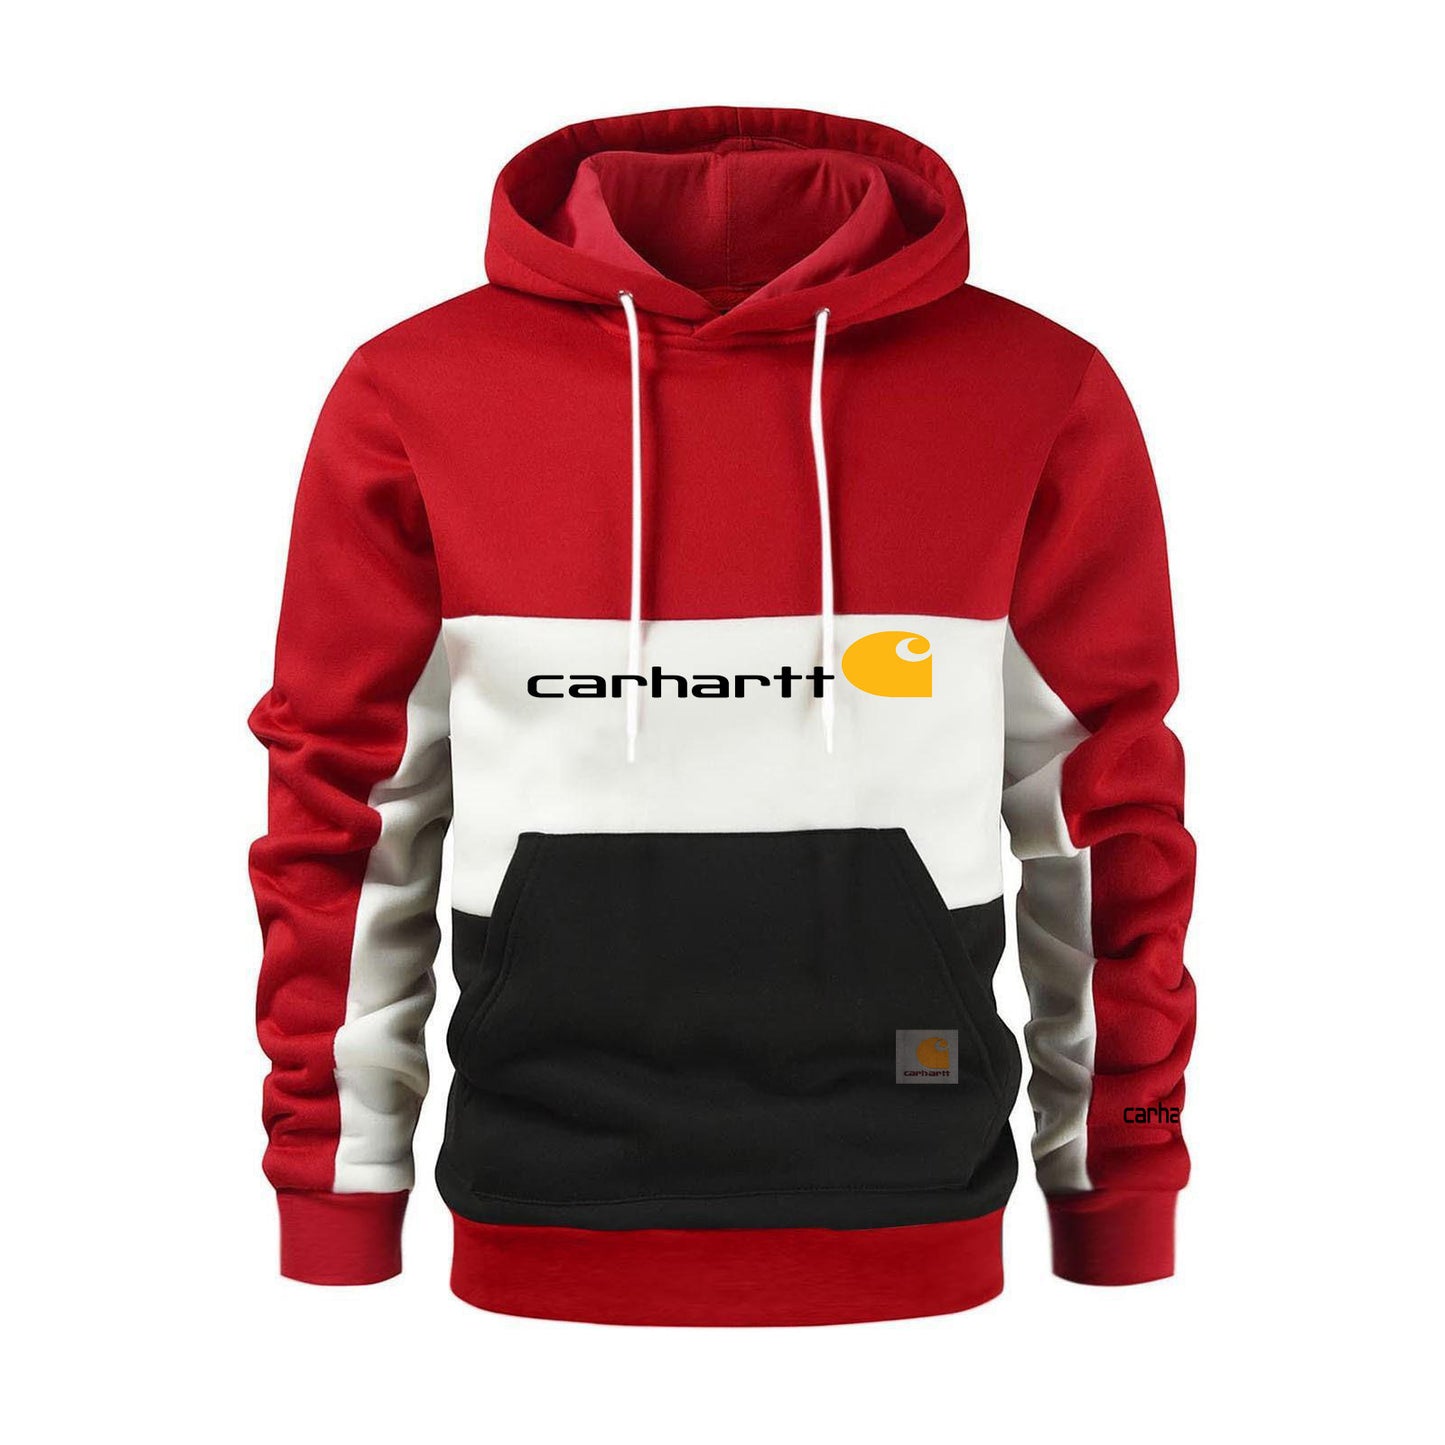 Carhartt Unisex Patchwork Hoodie Casual Sweater